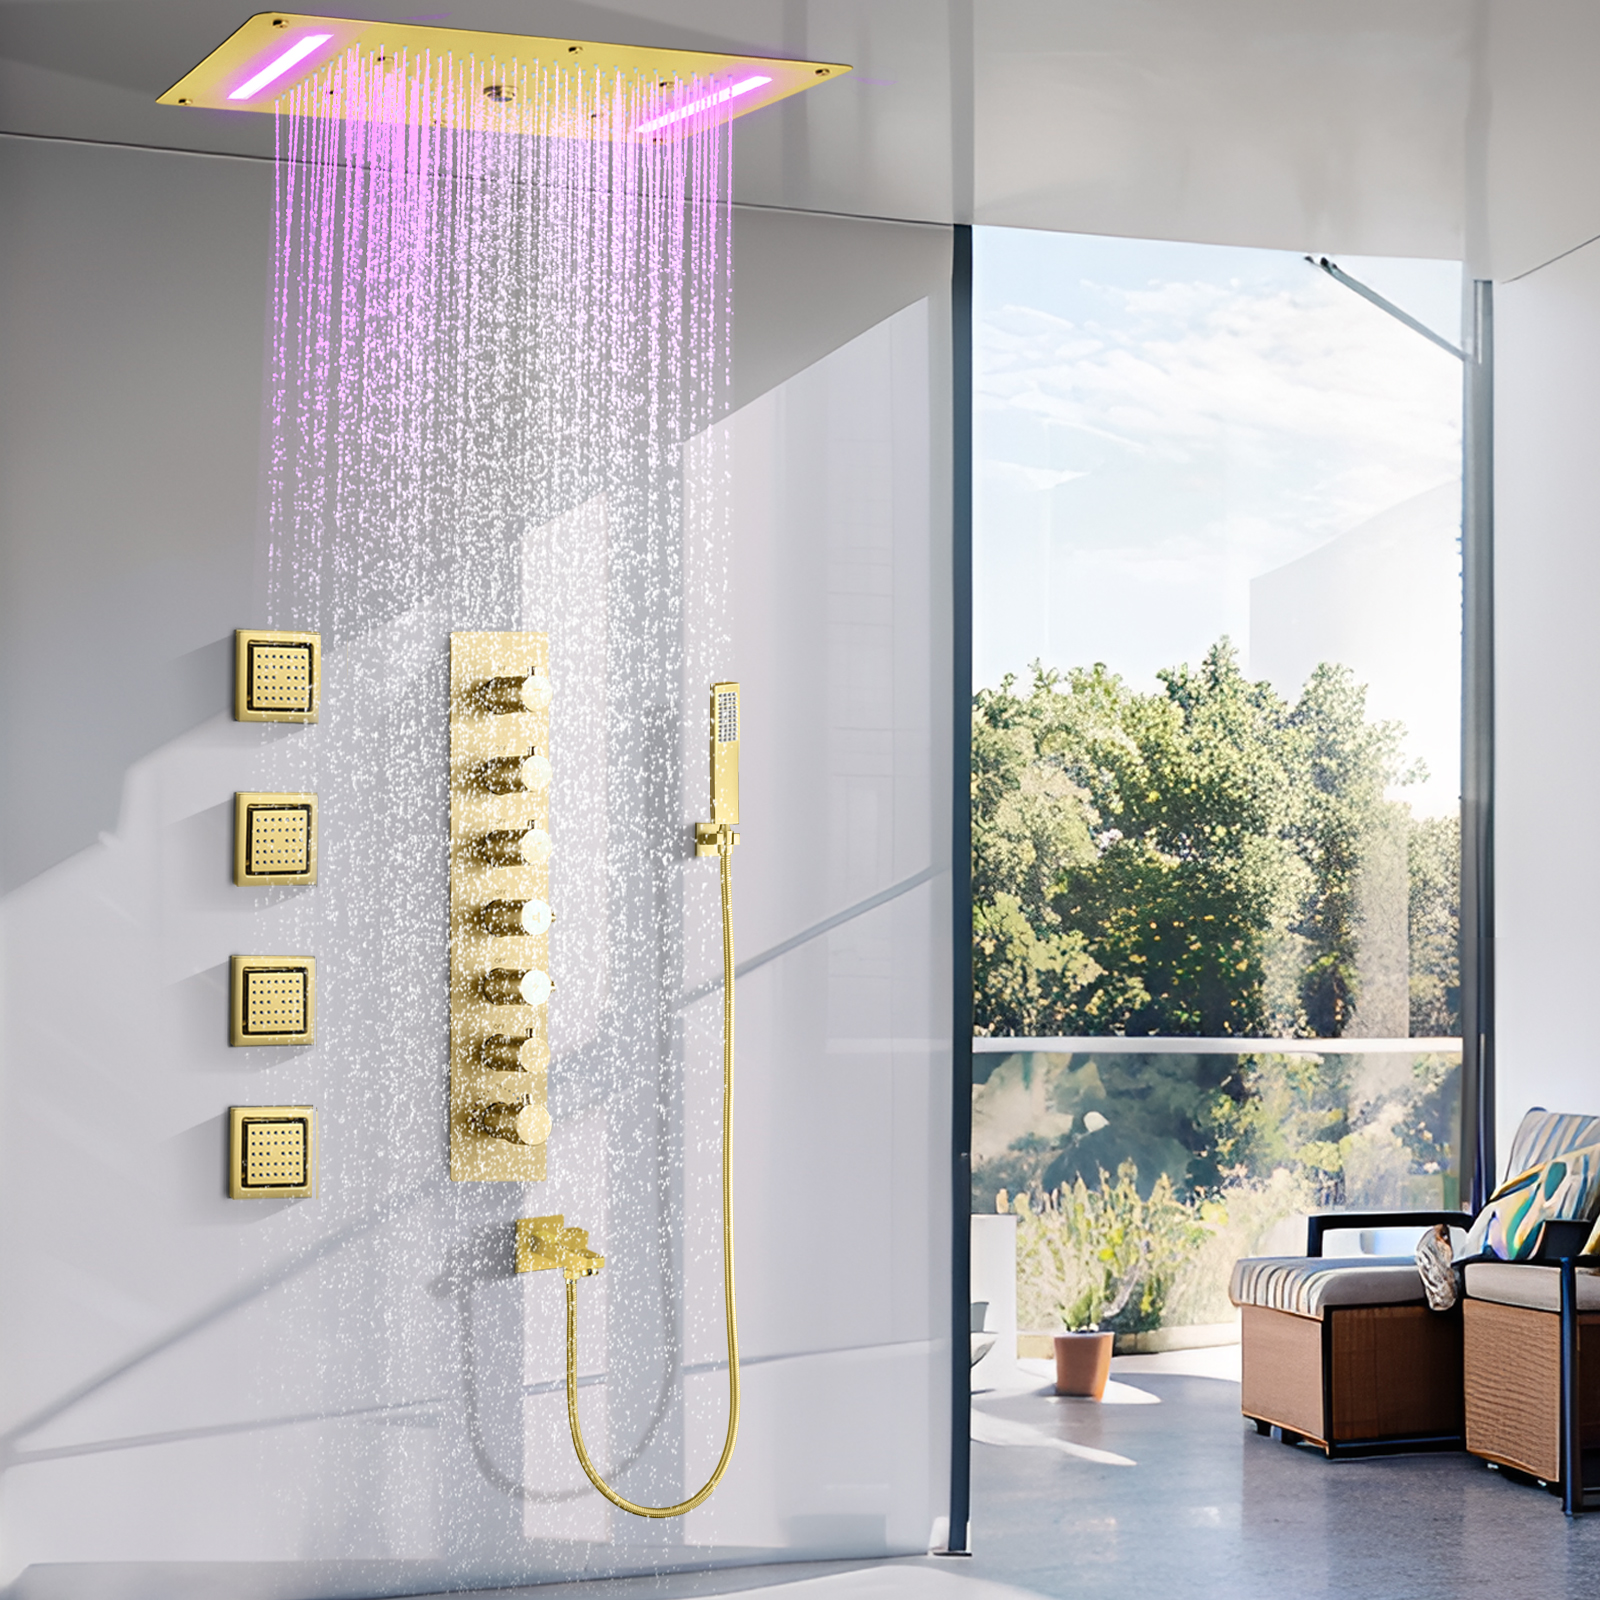 70x38 سنتيمتر نحى الذهب دش جناح معلق خلاط مخفي LED غرفة الاستحمام الحمام صنبور الماء نظام التدليك